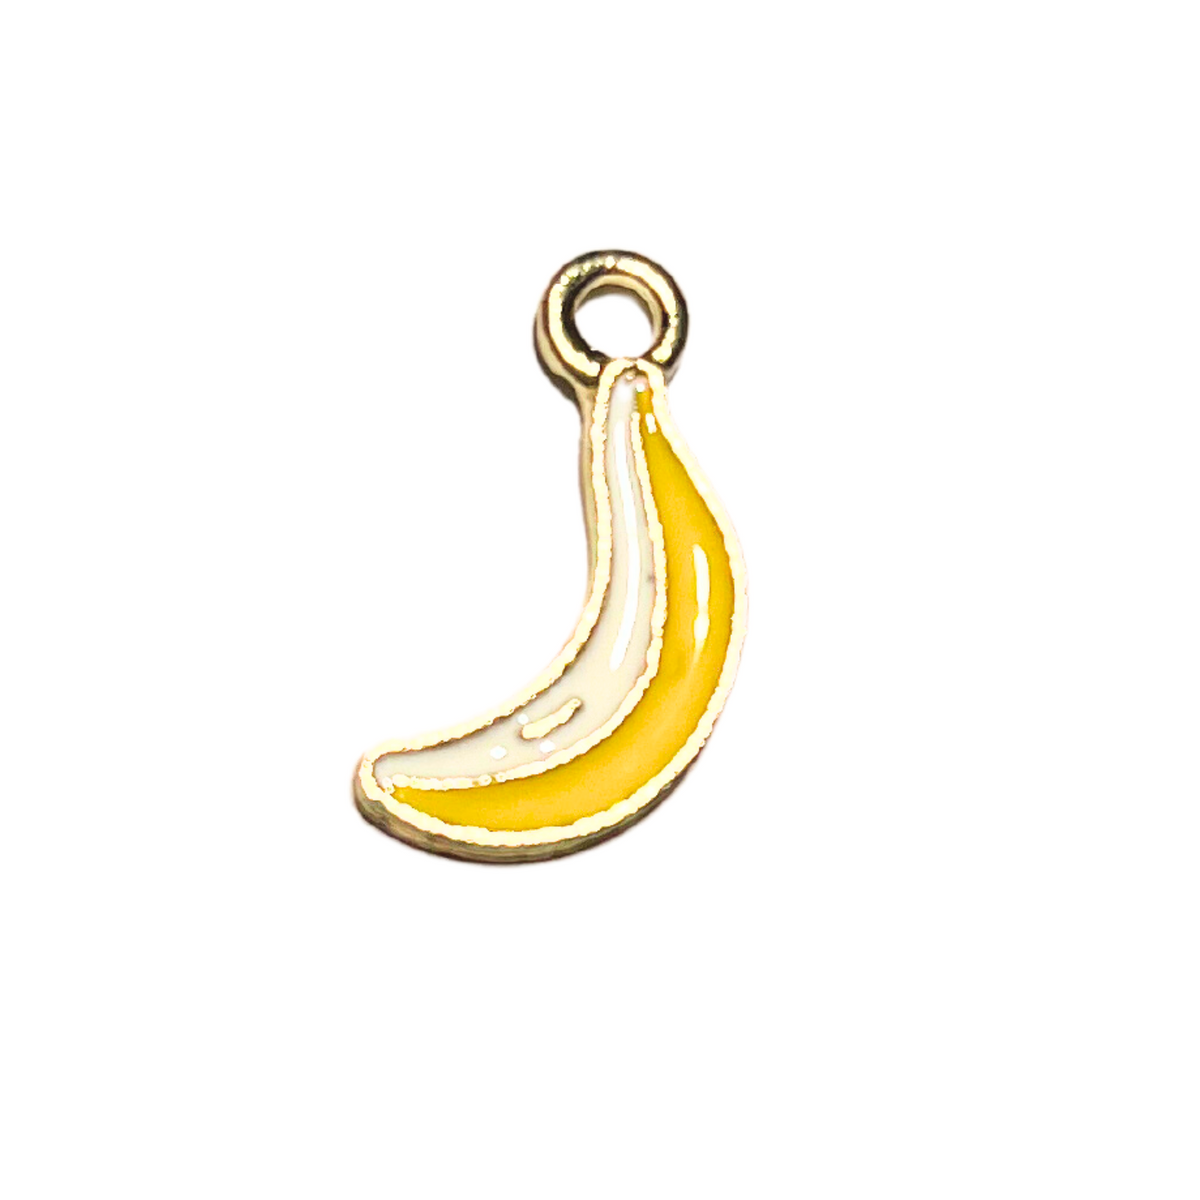 Enamel Banana Pen Charms - 10 Pack